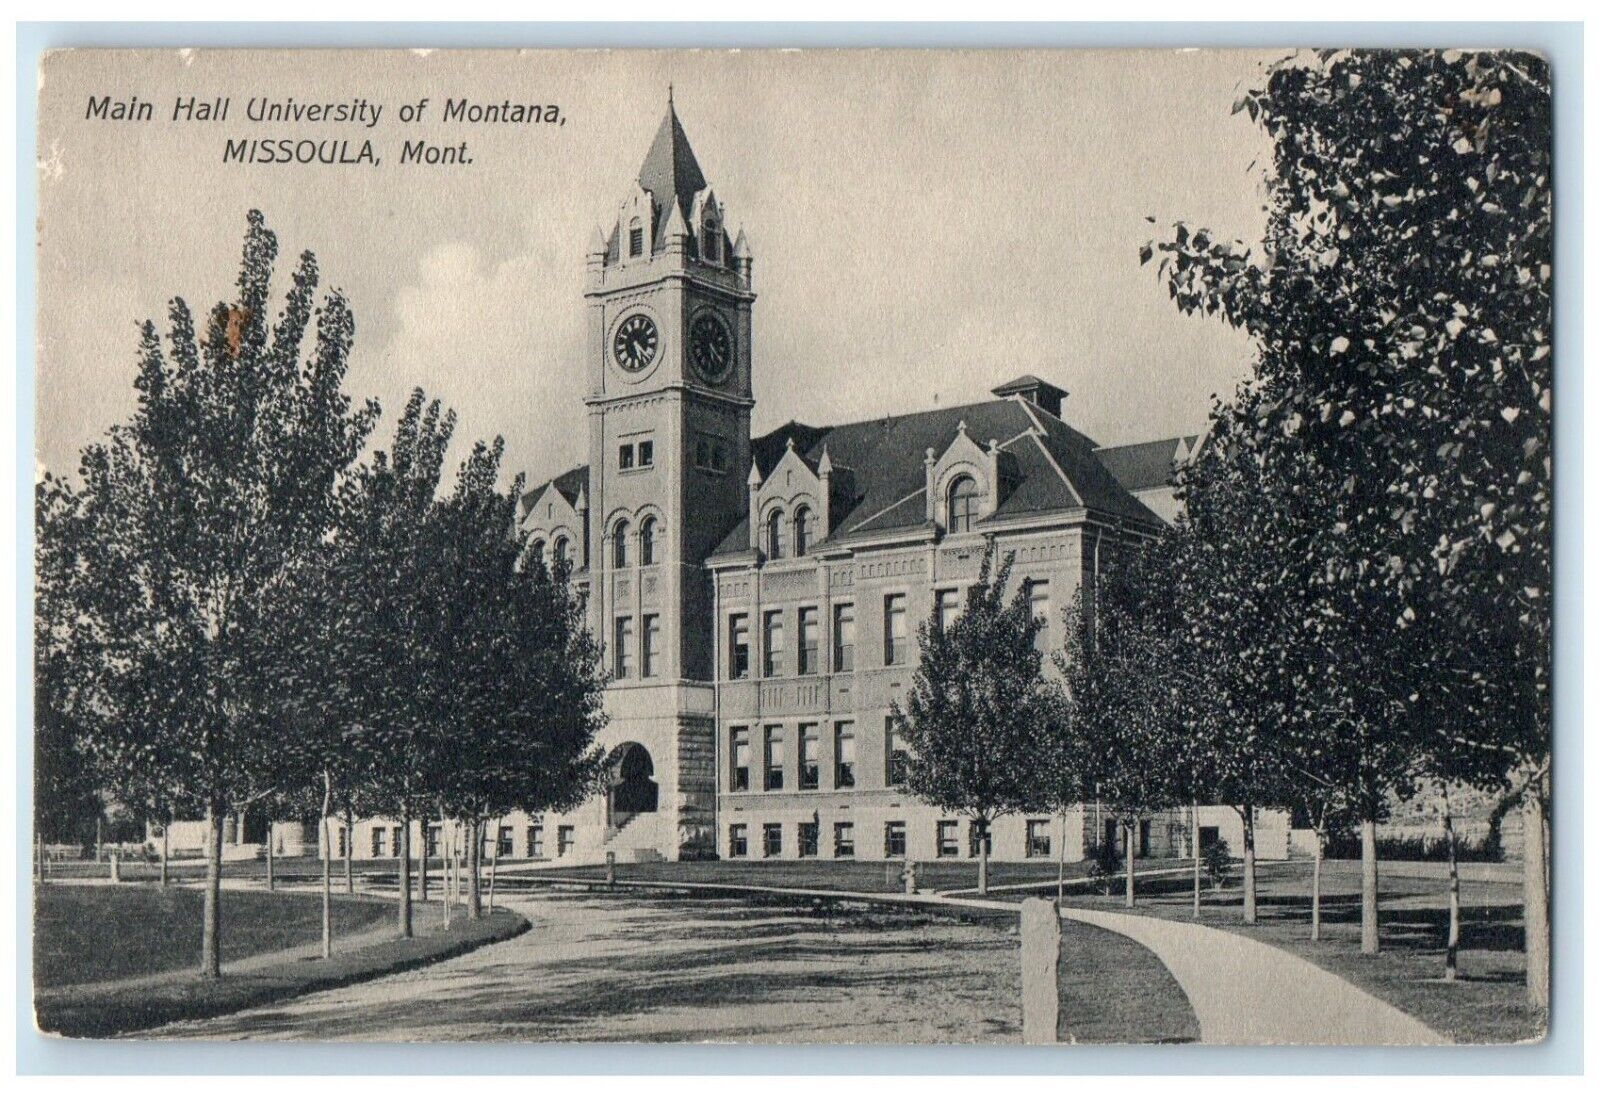 c1910 Main Hall University Exterior Building Missoula Montana Vintage Postcard